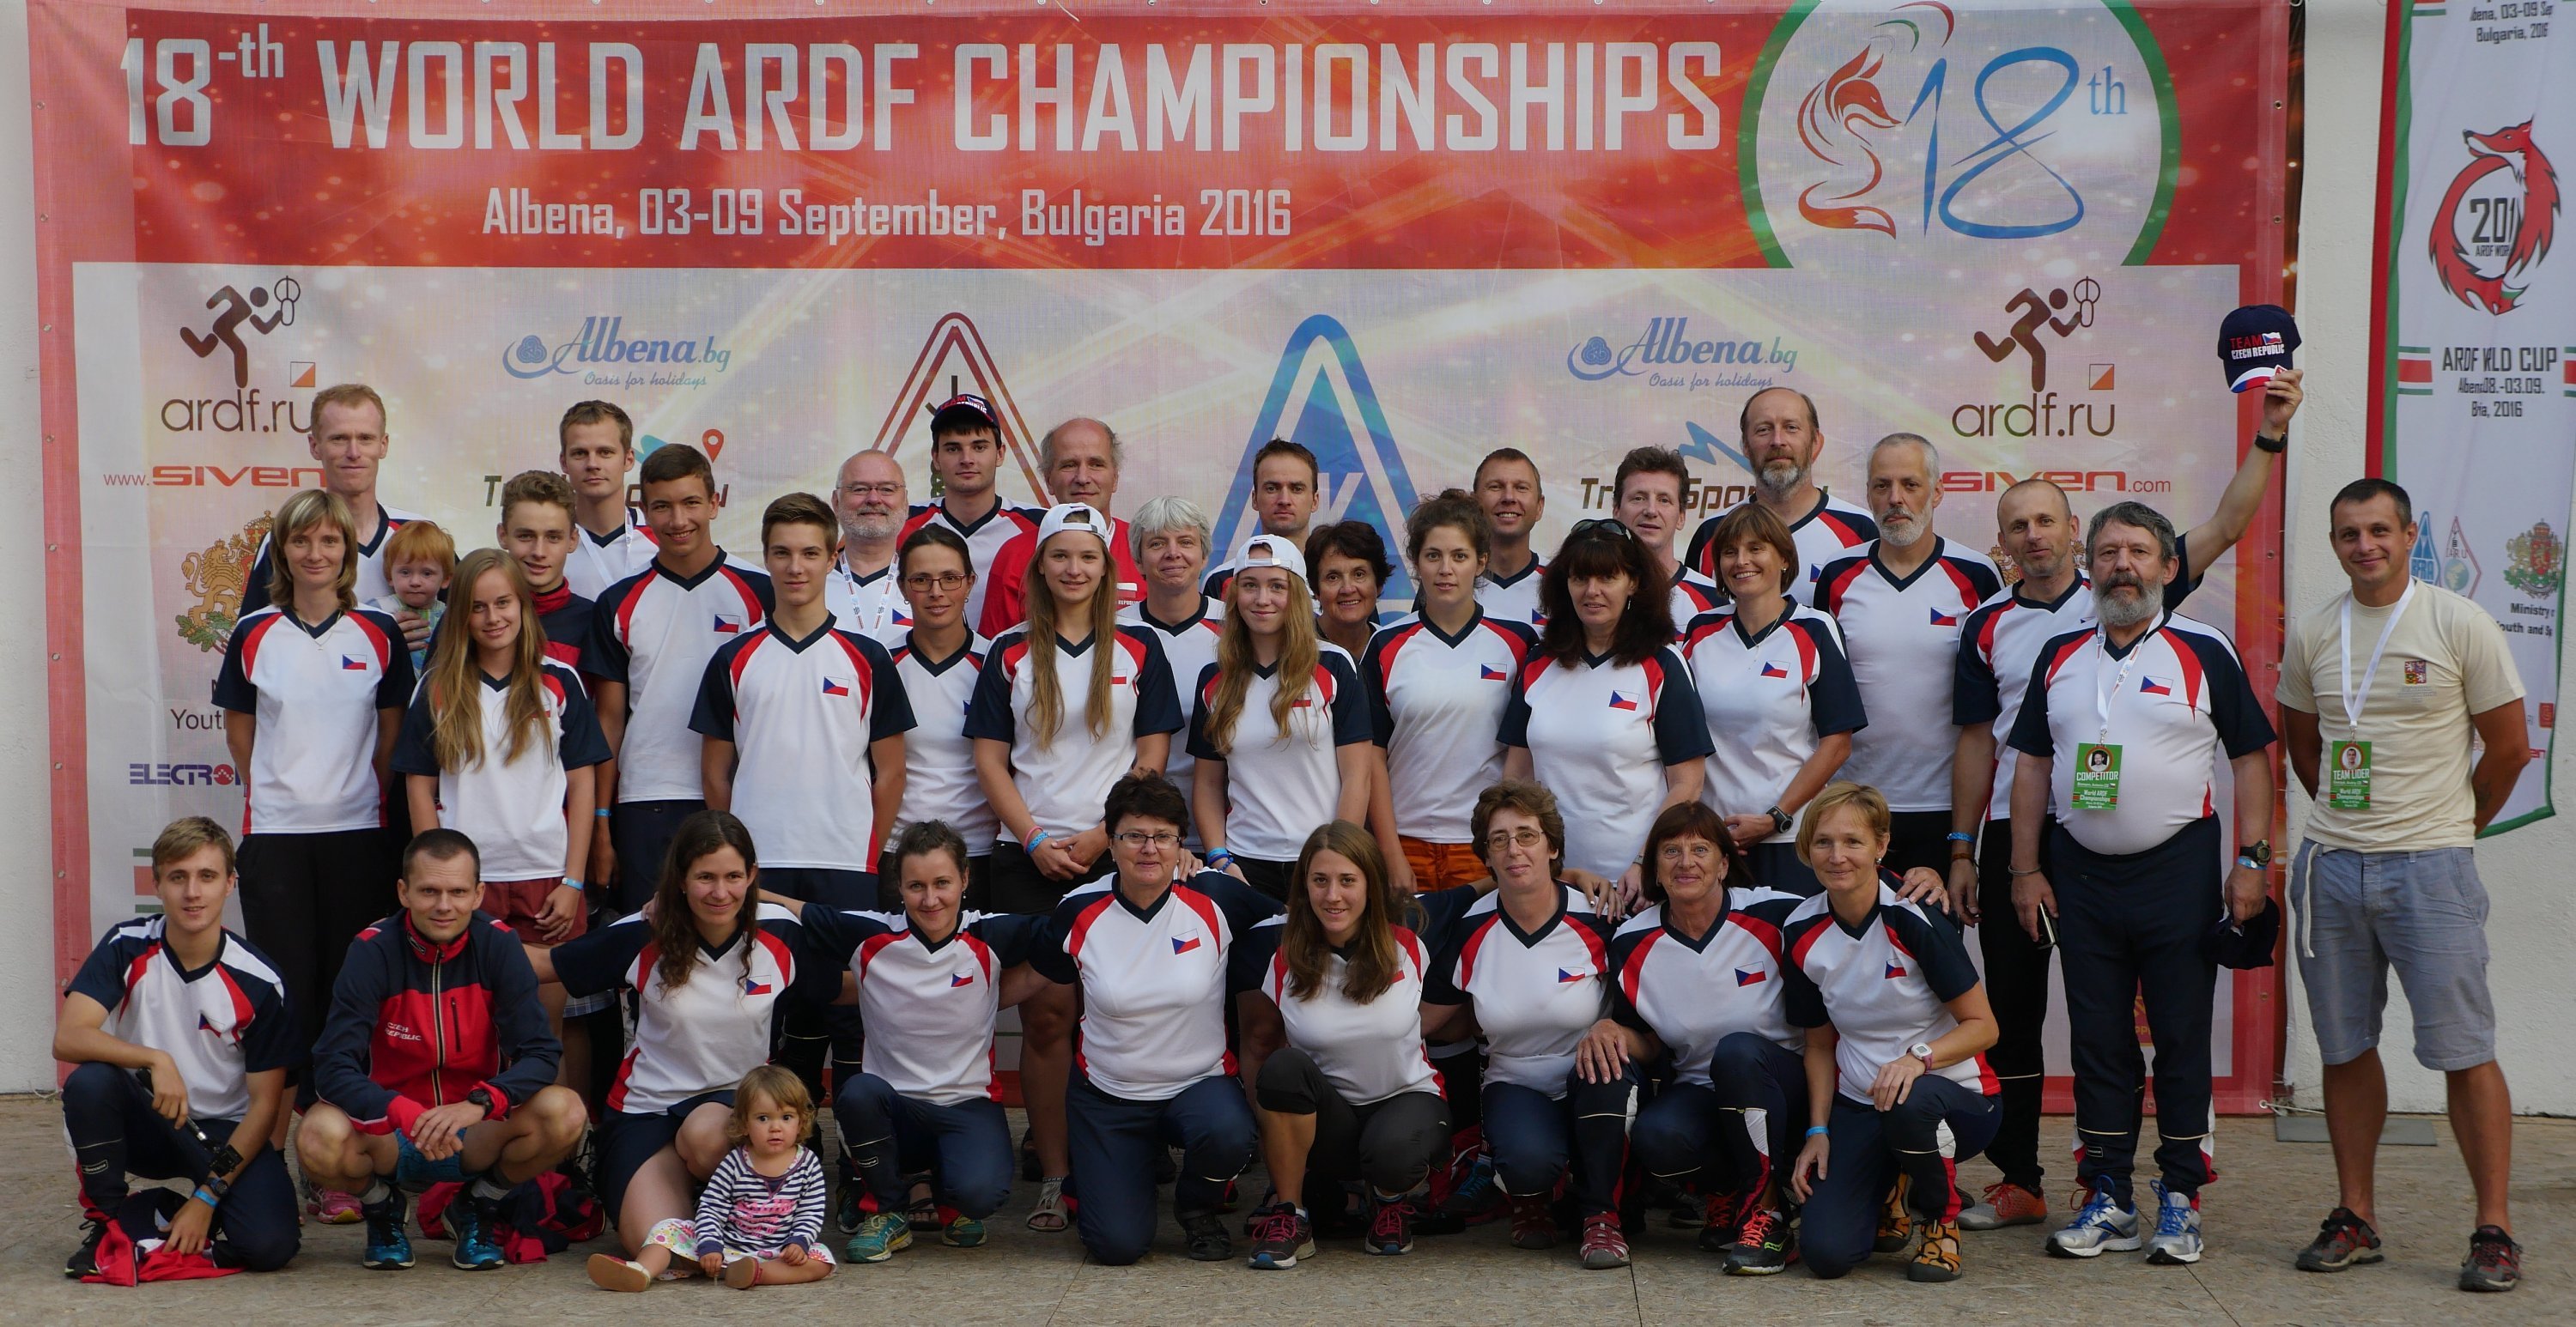 czech ardf team 2016 Bulgaria